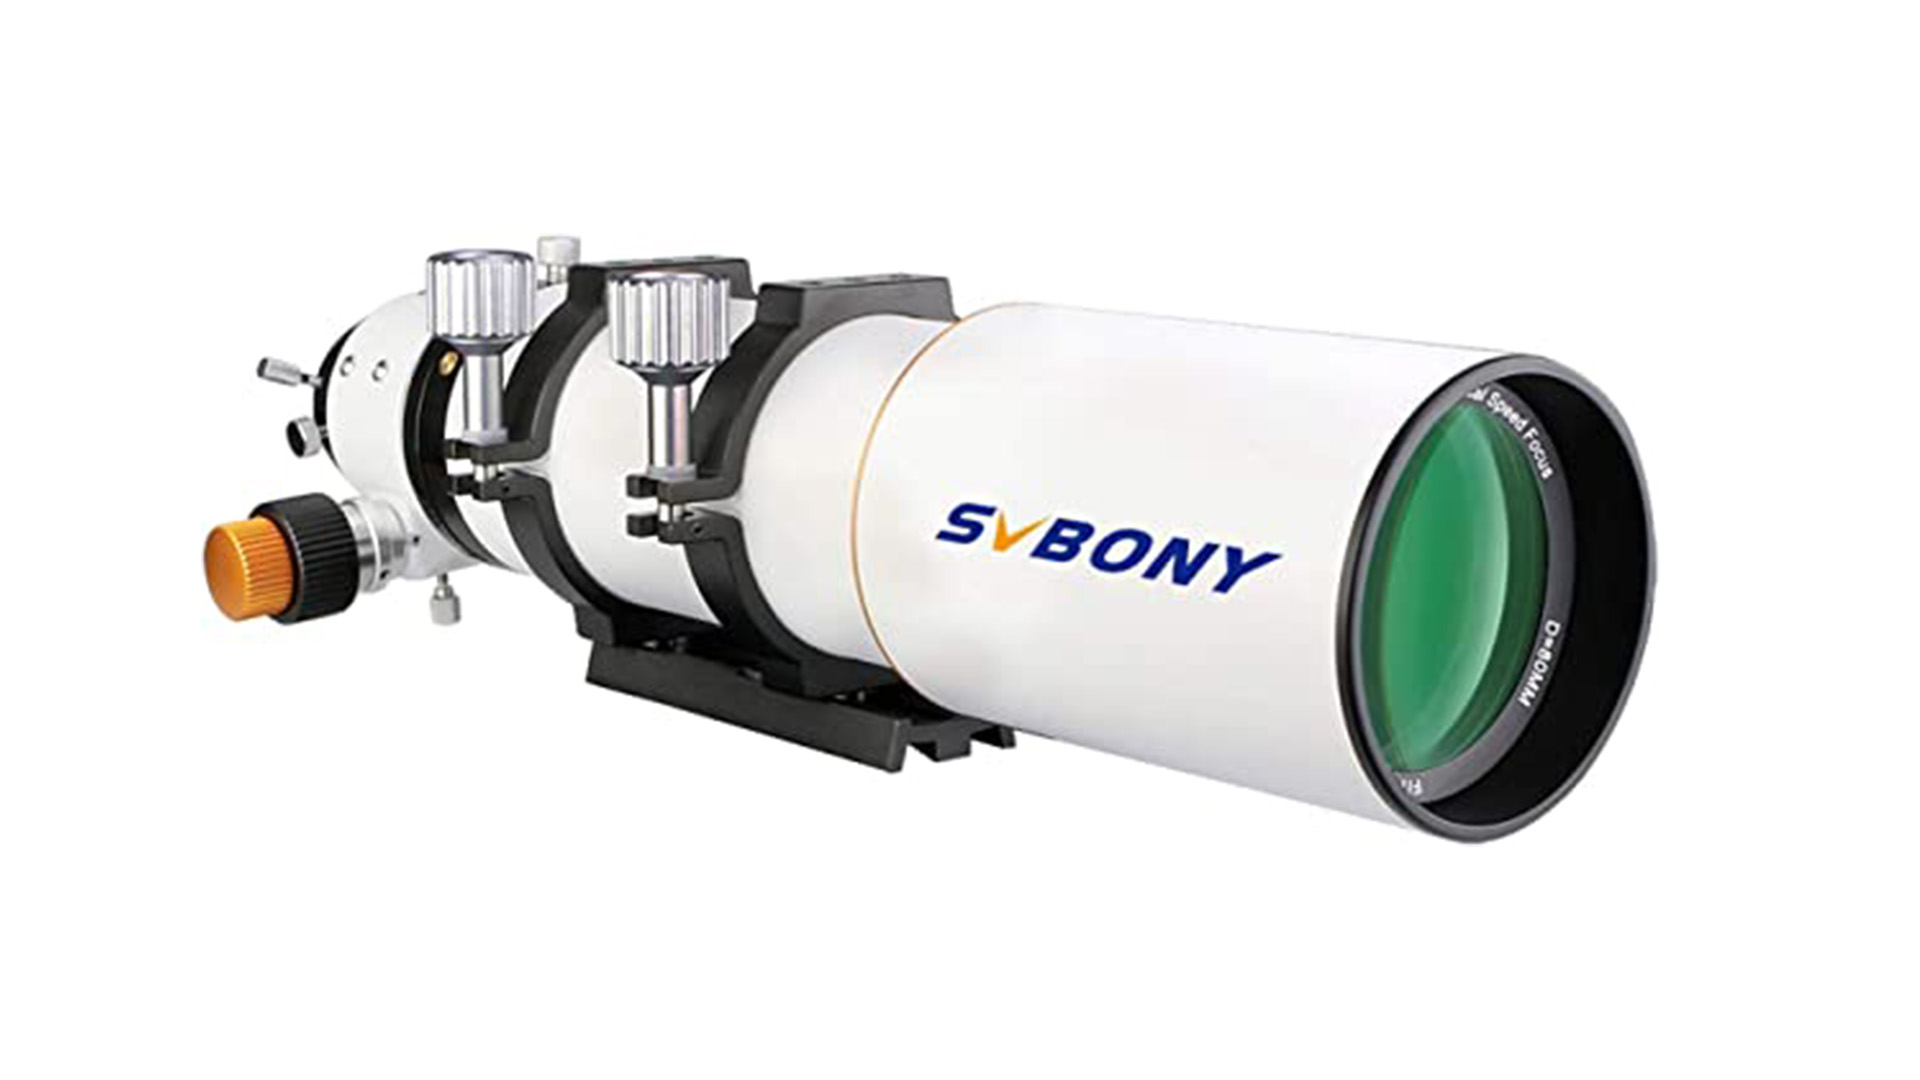 SVBONY SV503 Telescope product photo